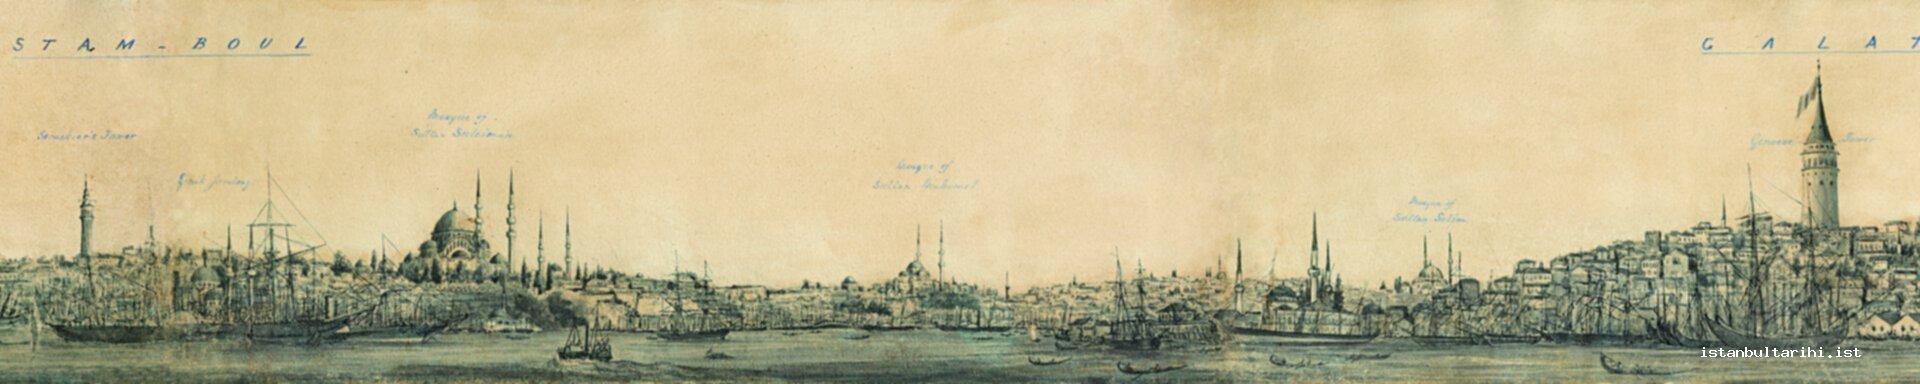 34a- Istanbul from Sarayburnu to Beşiktaş (Montagu B. Dunn, Panaroma of Istanbul, 1855)